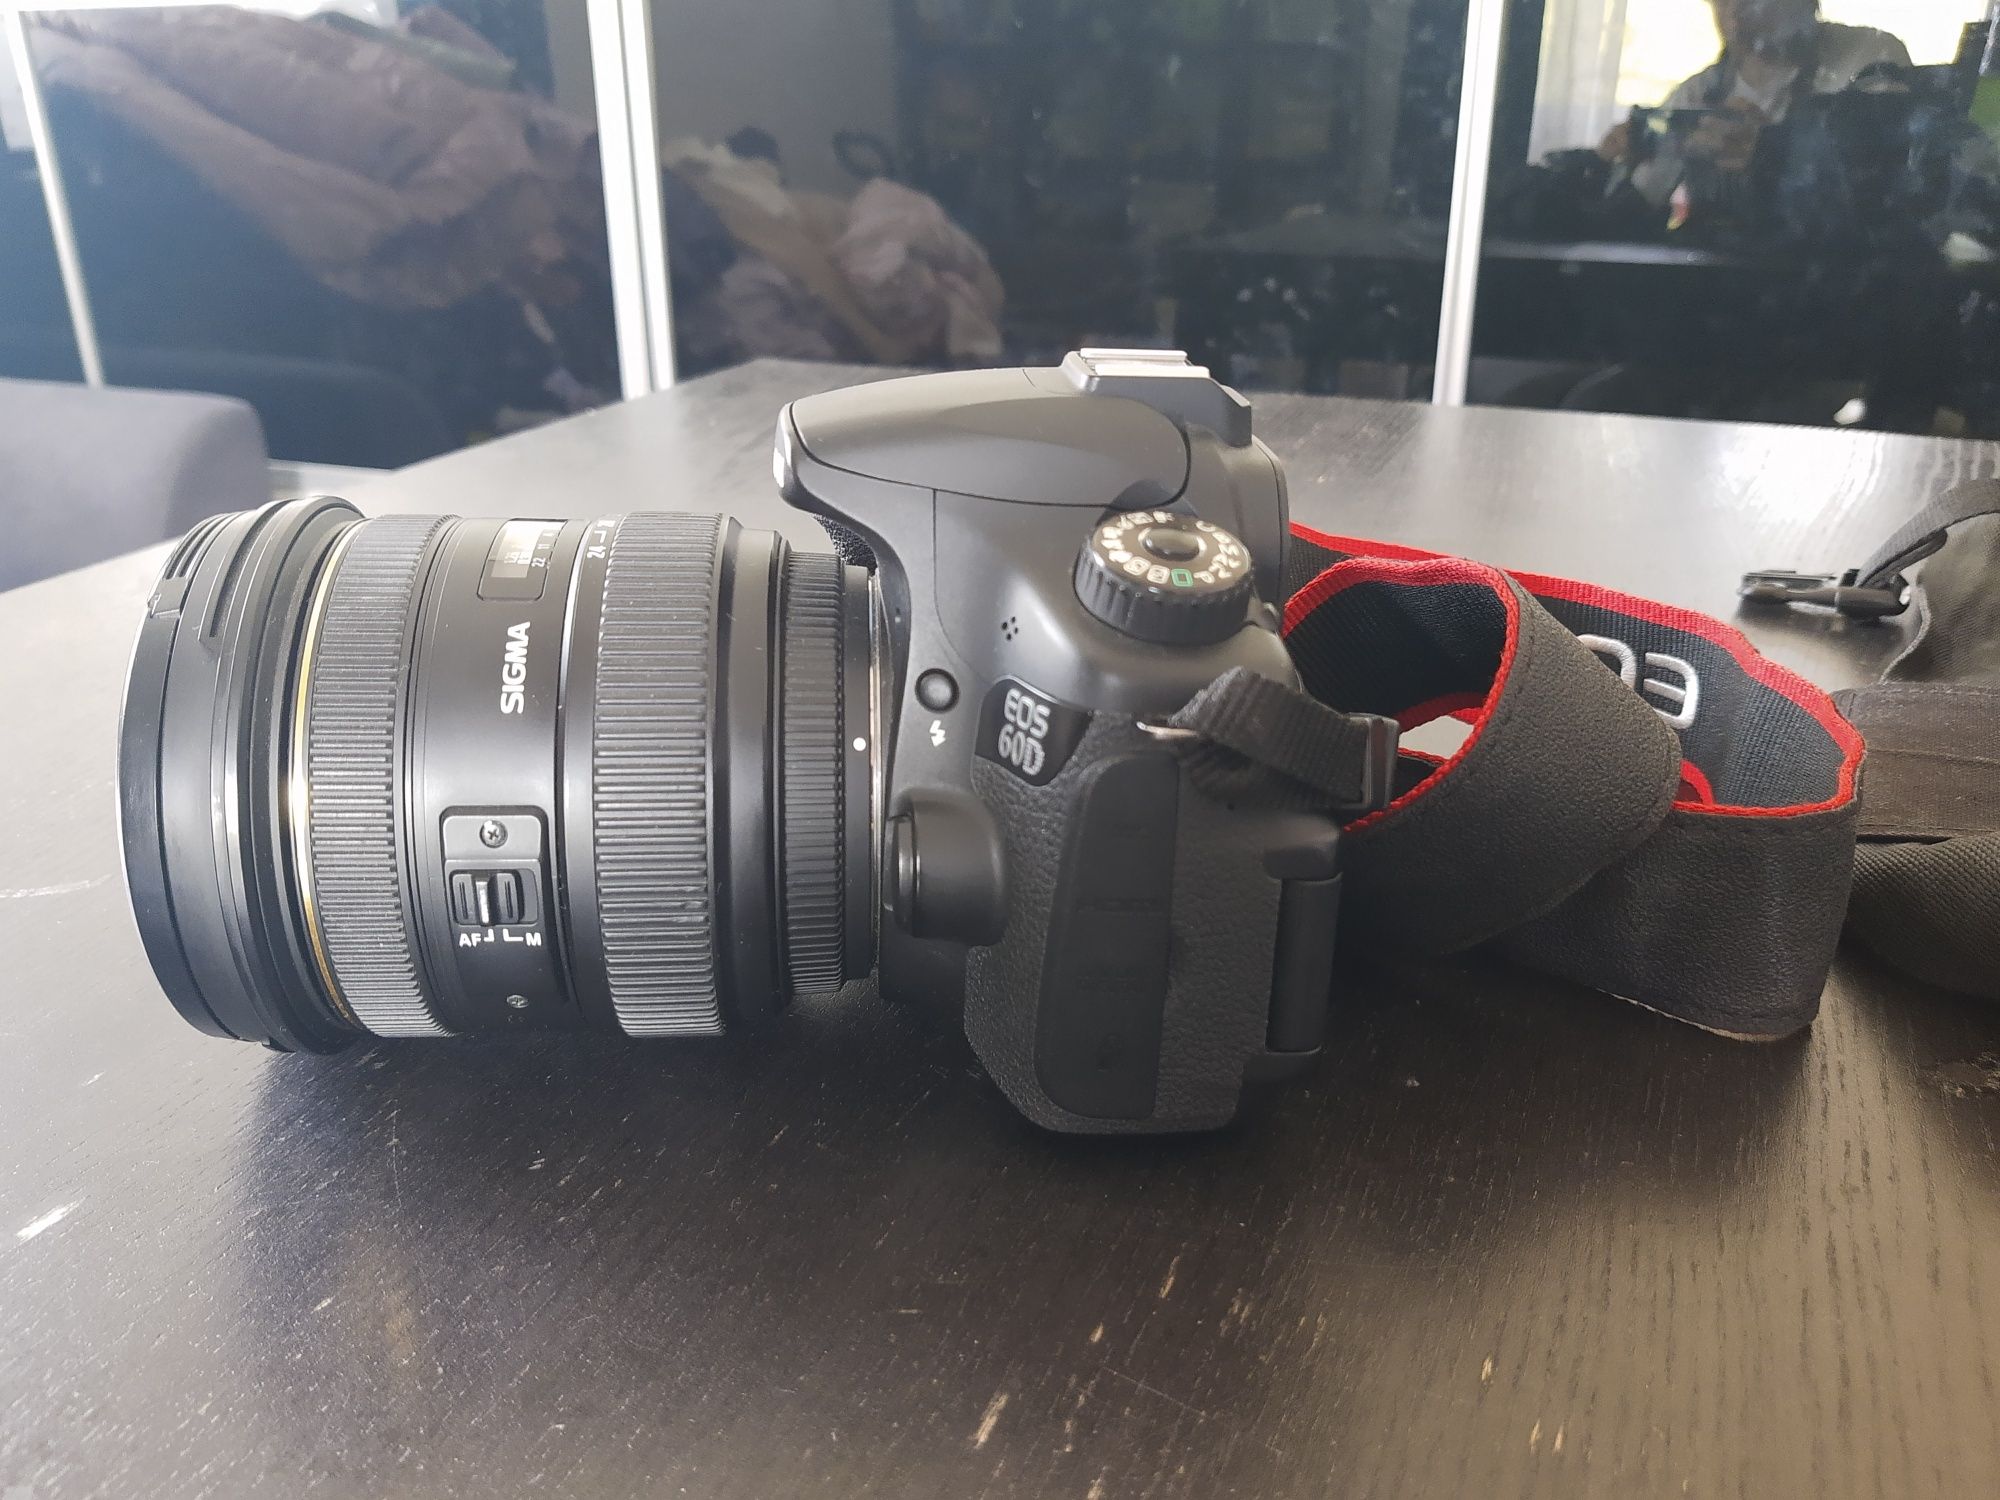 Aparat Canon EOS60D z obiektywem Sigma 24-70mm 1:2.8 DG HSM oraz filtr